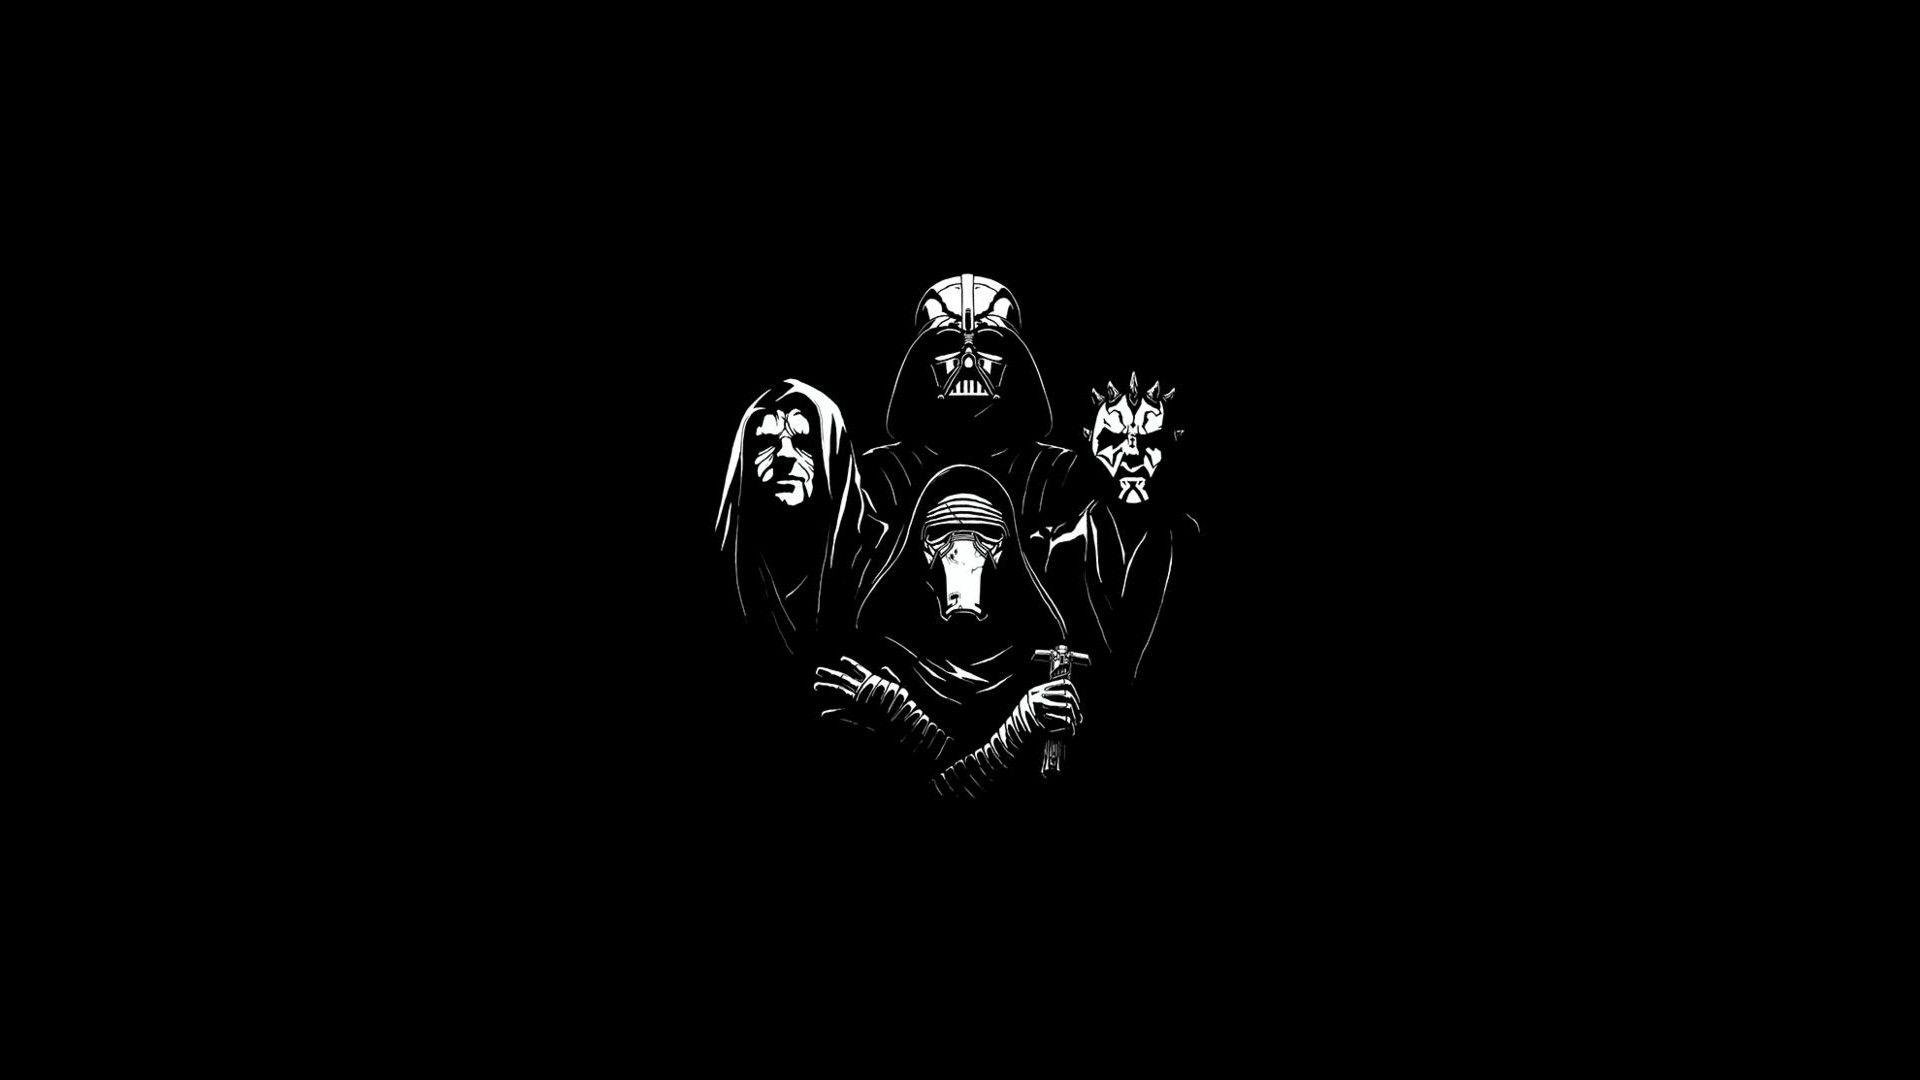 Darth Logo - Wallpaper : Star Wars, logo, Darth Vader, Kylo Ren, Queen, Darth ...